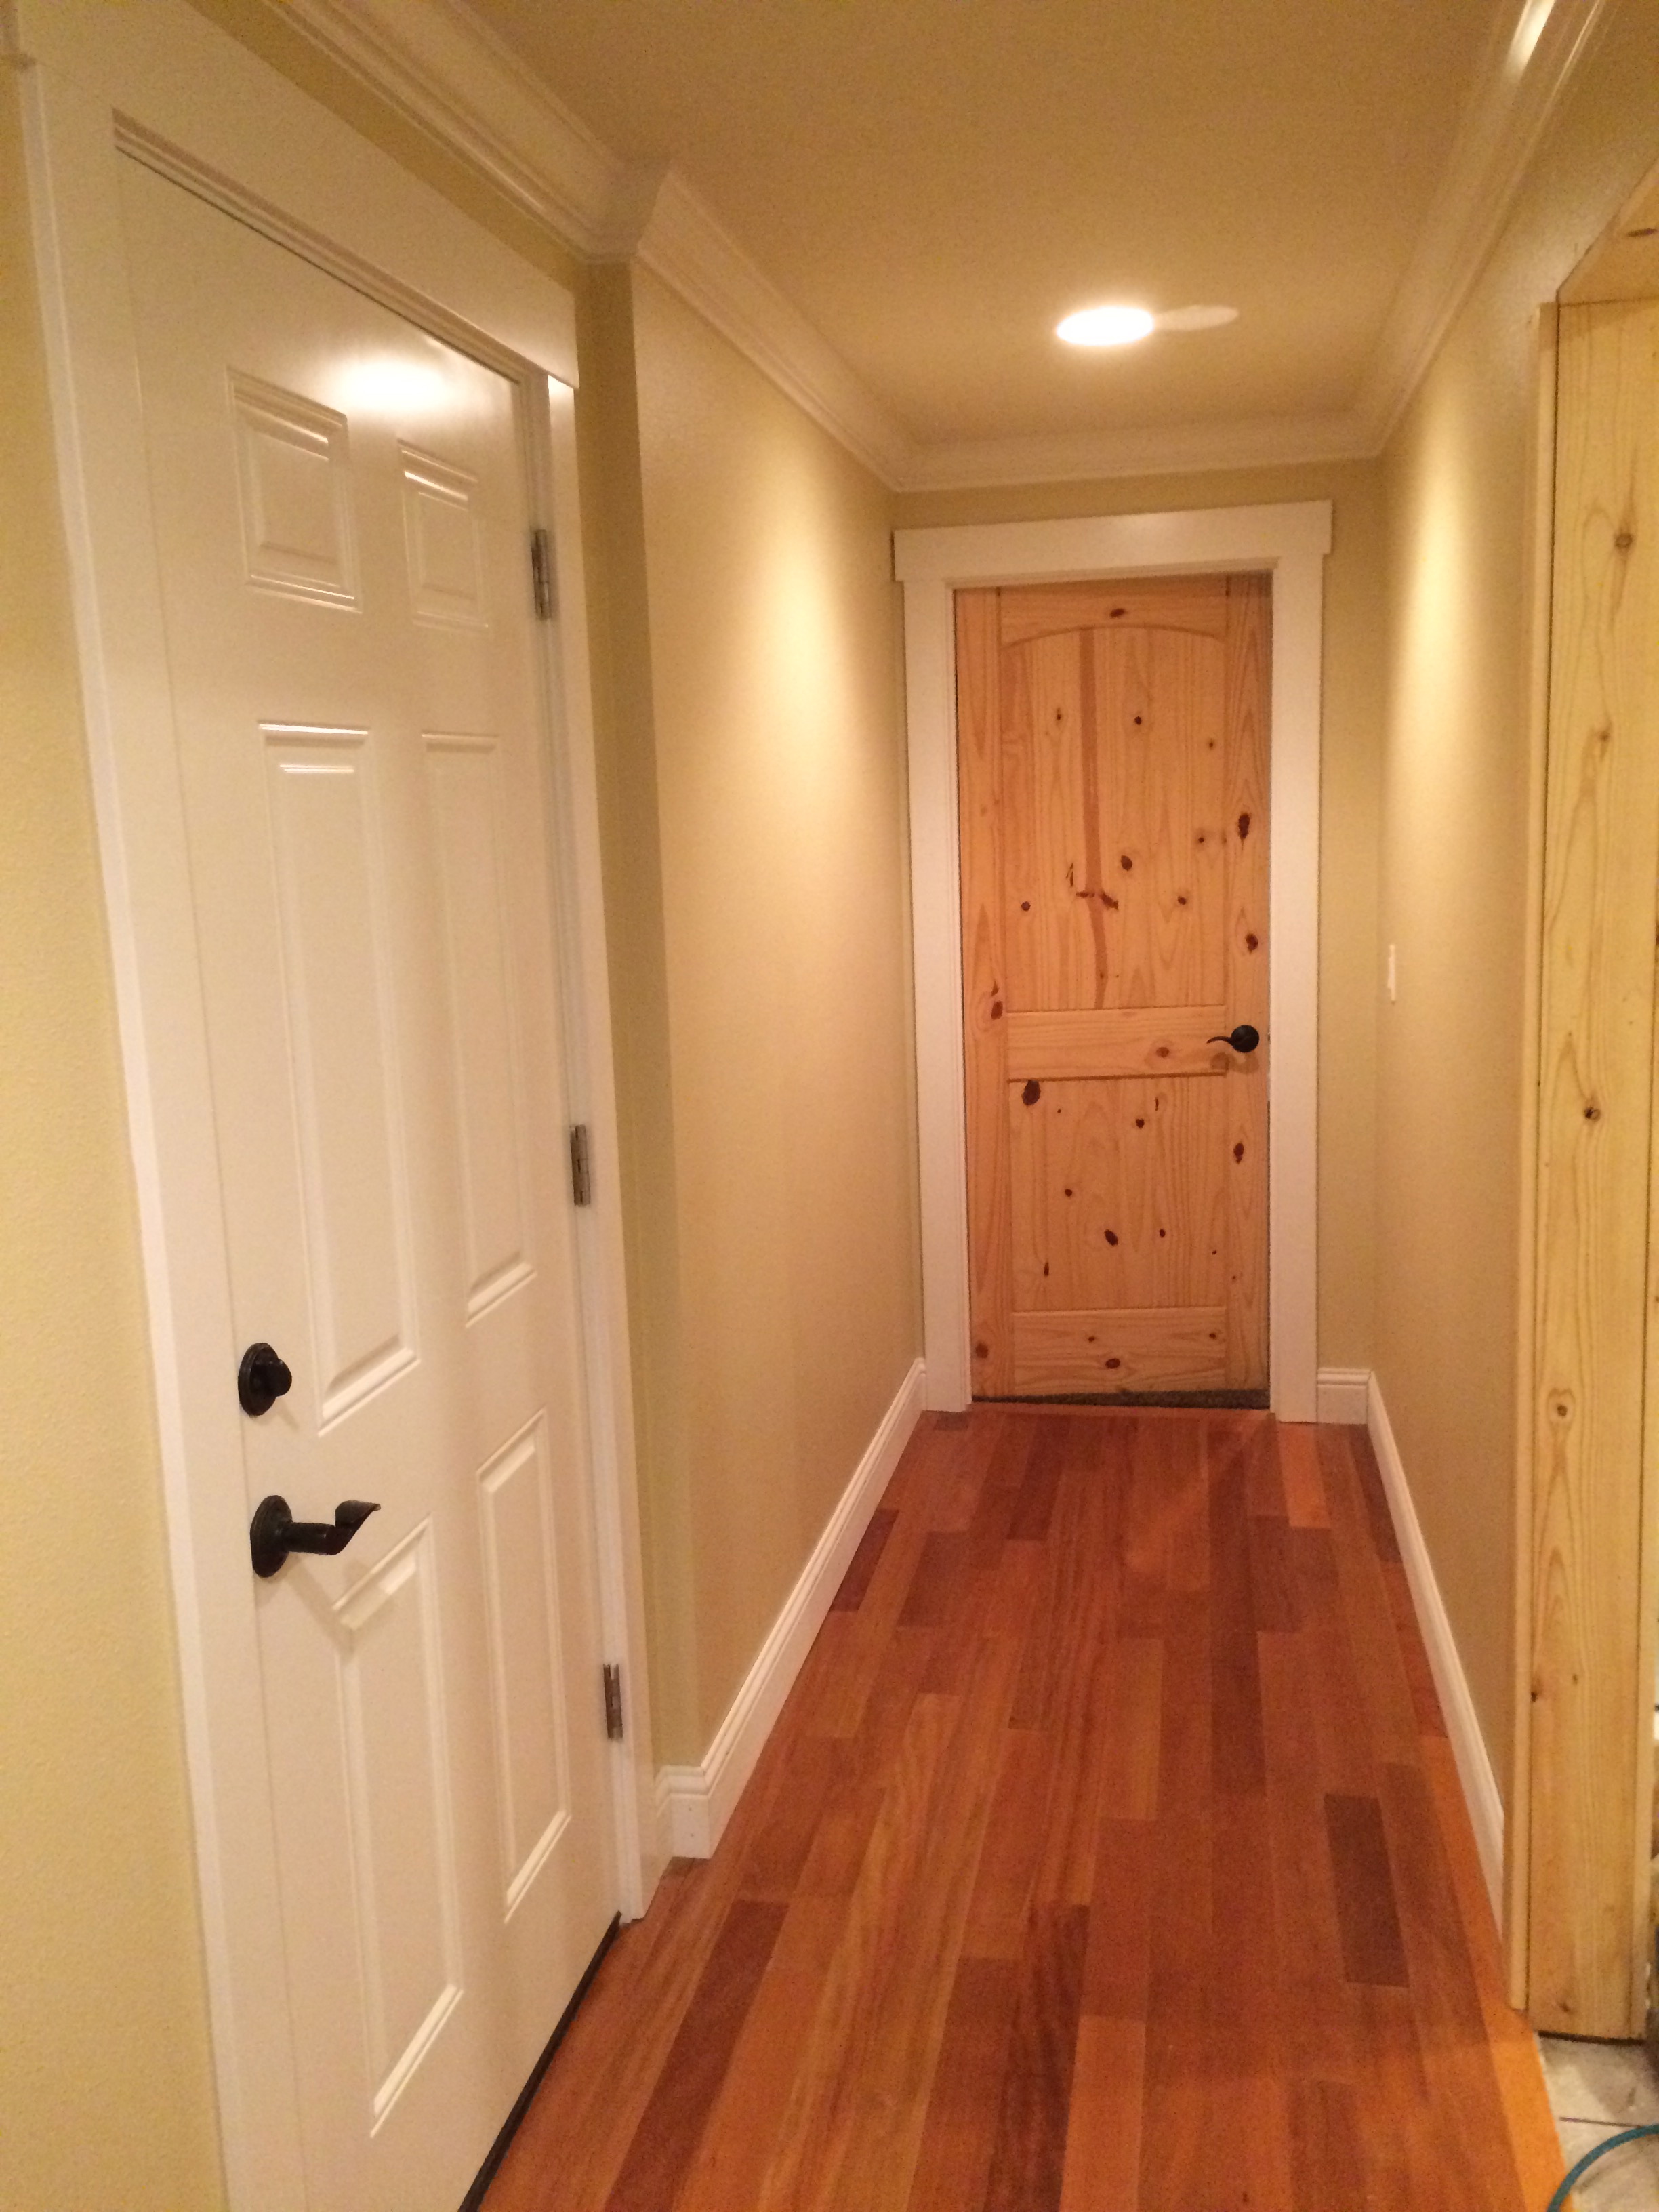 New addition, hardwood floors & doors